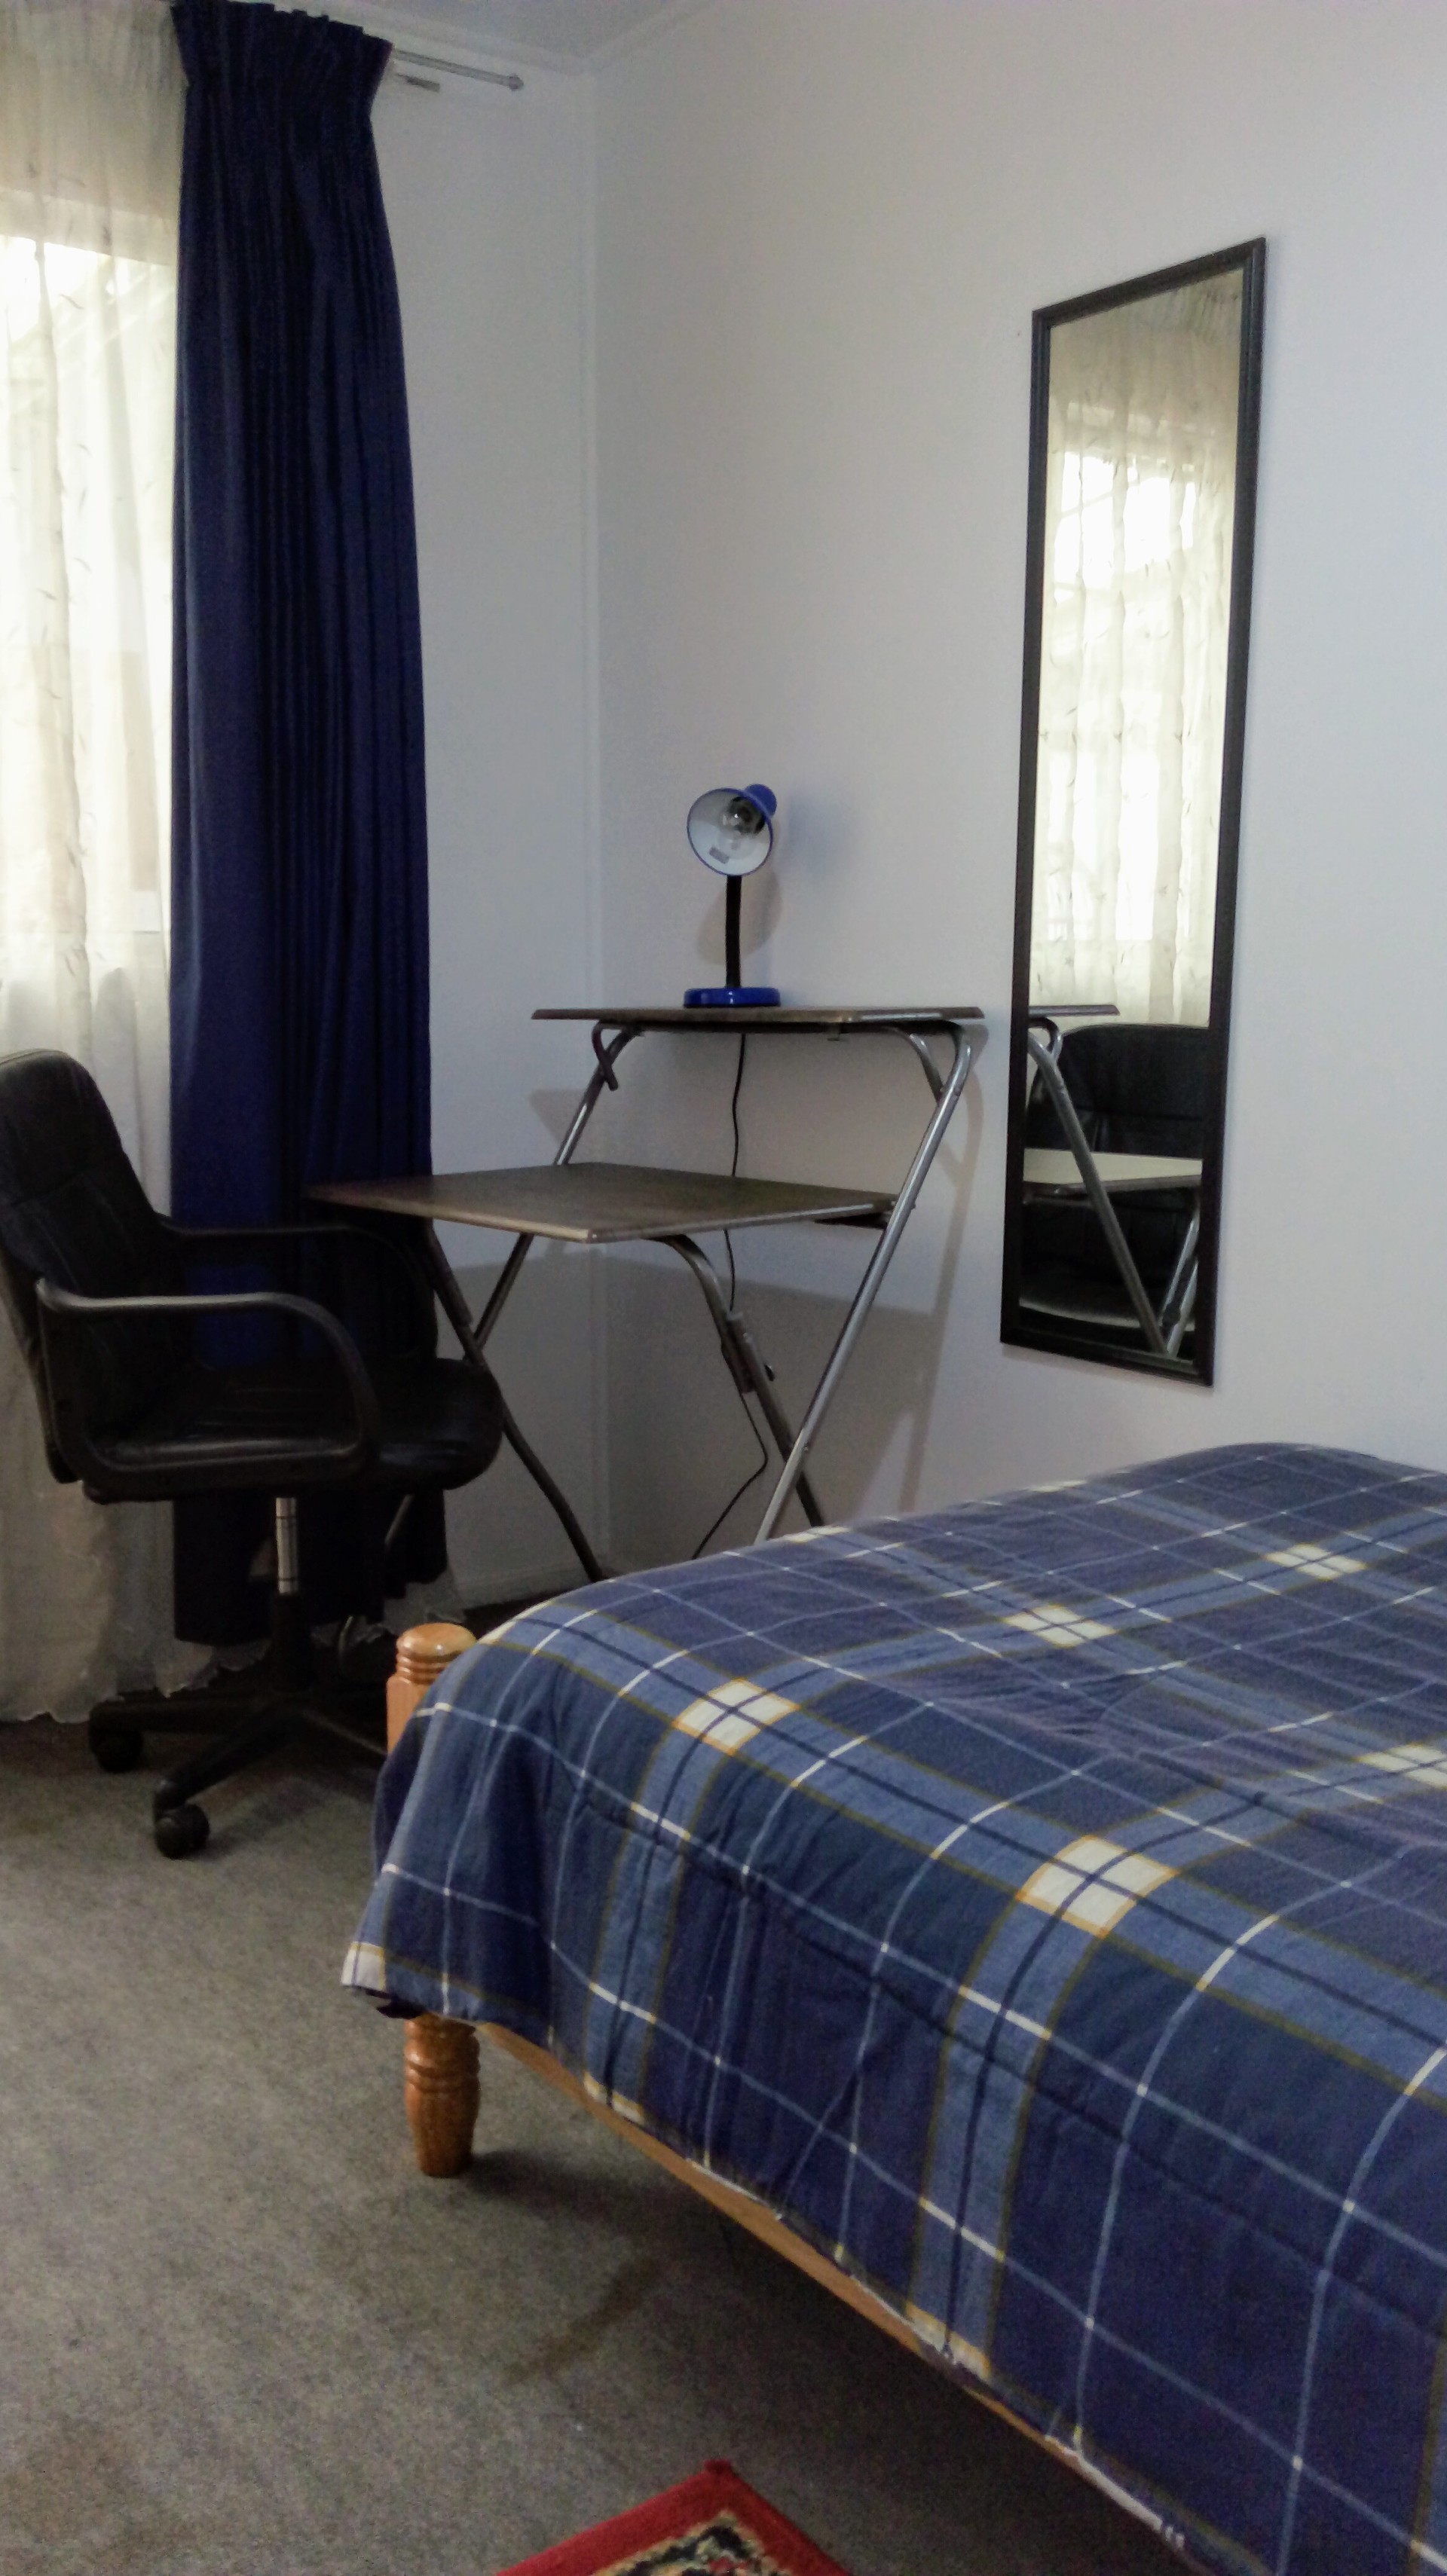 Room For Rent In 14 Bedroom Apartment In Vina Del Mar